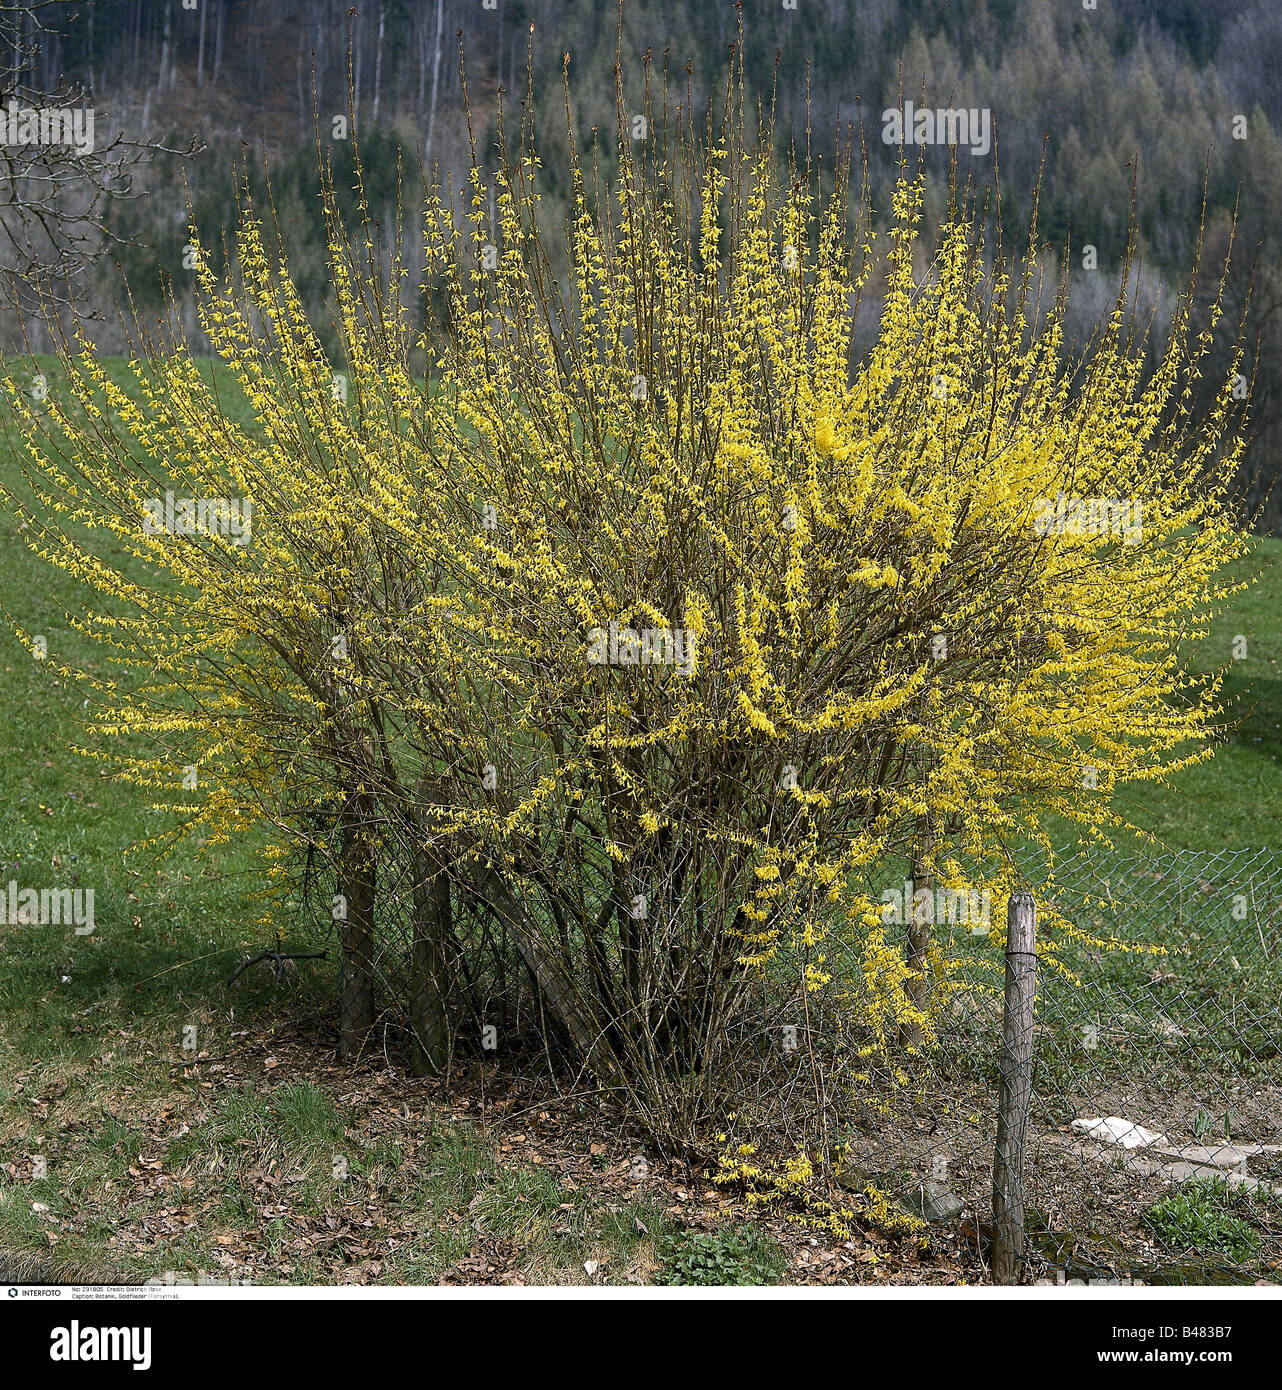 botany, Forsythia, "Forsythia suspensa", flowering shrub, Oleaceae, yellow, blooming, flower, flowers, bush, Stock Photo